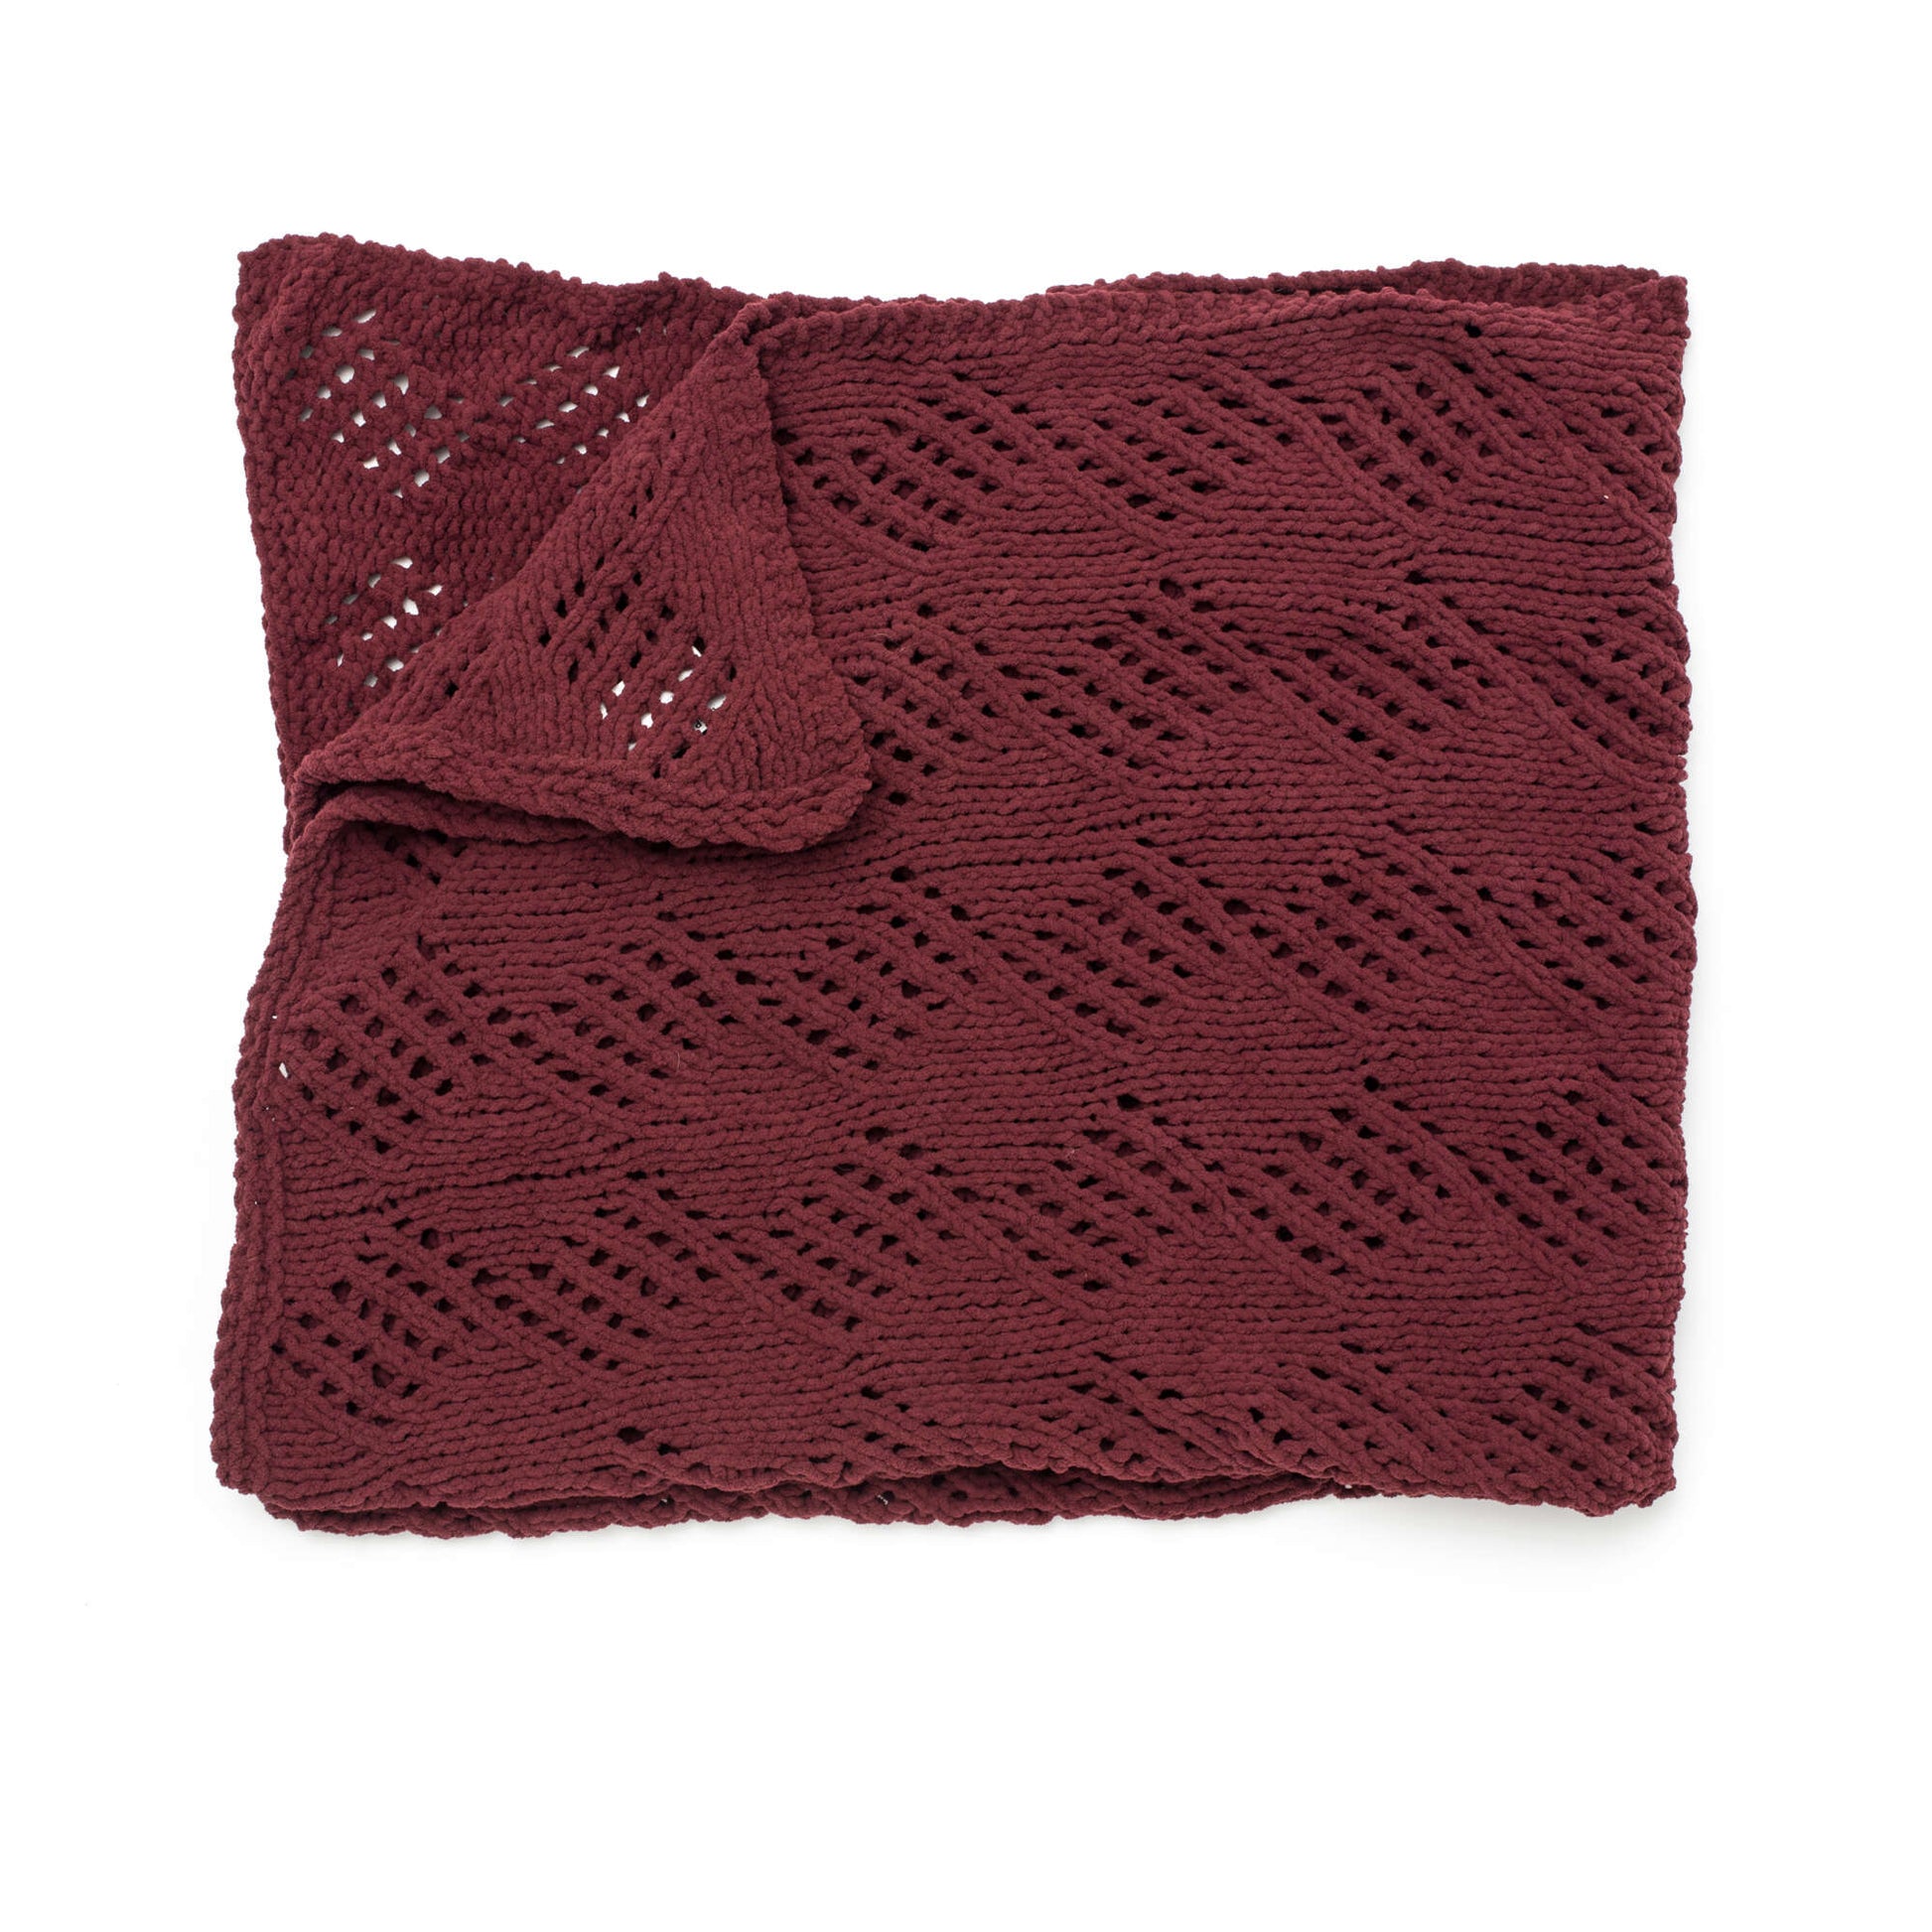 Free Bernat Angled Eyelets Knit Blanket Pattern